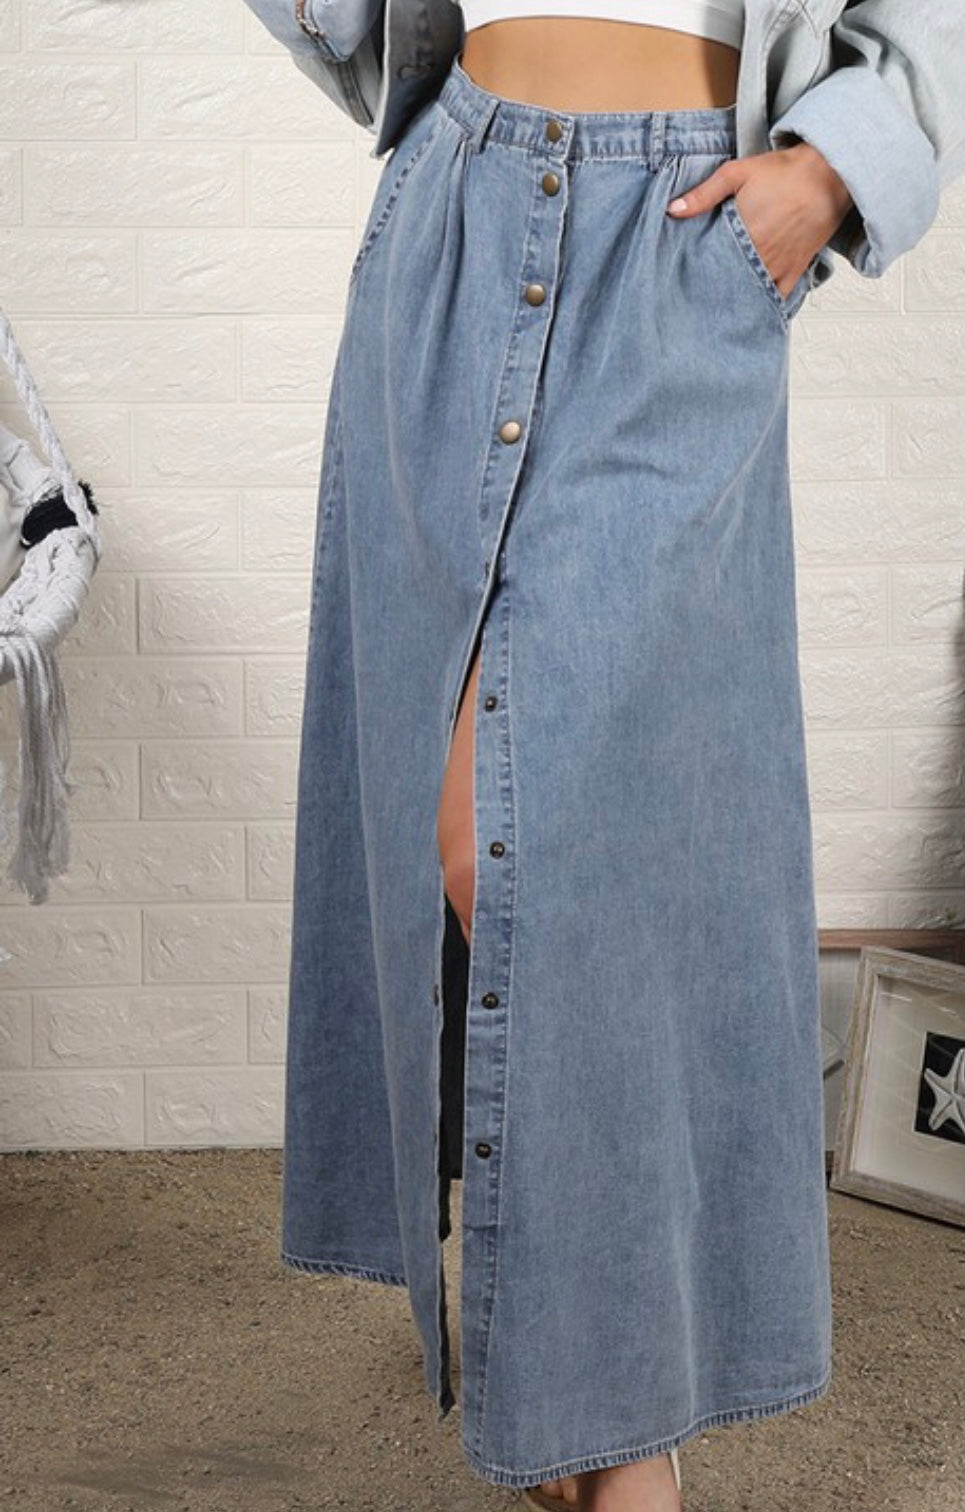 Light Jean Colored Button Skirt Plus-Plus